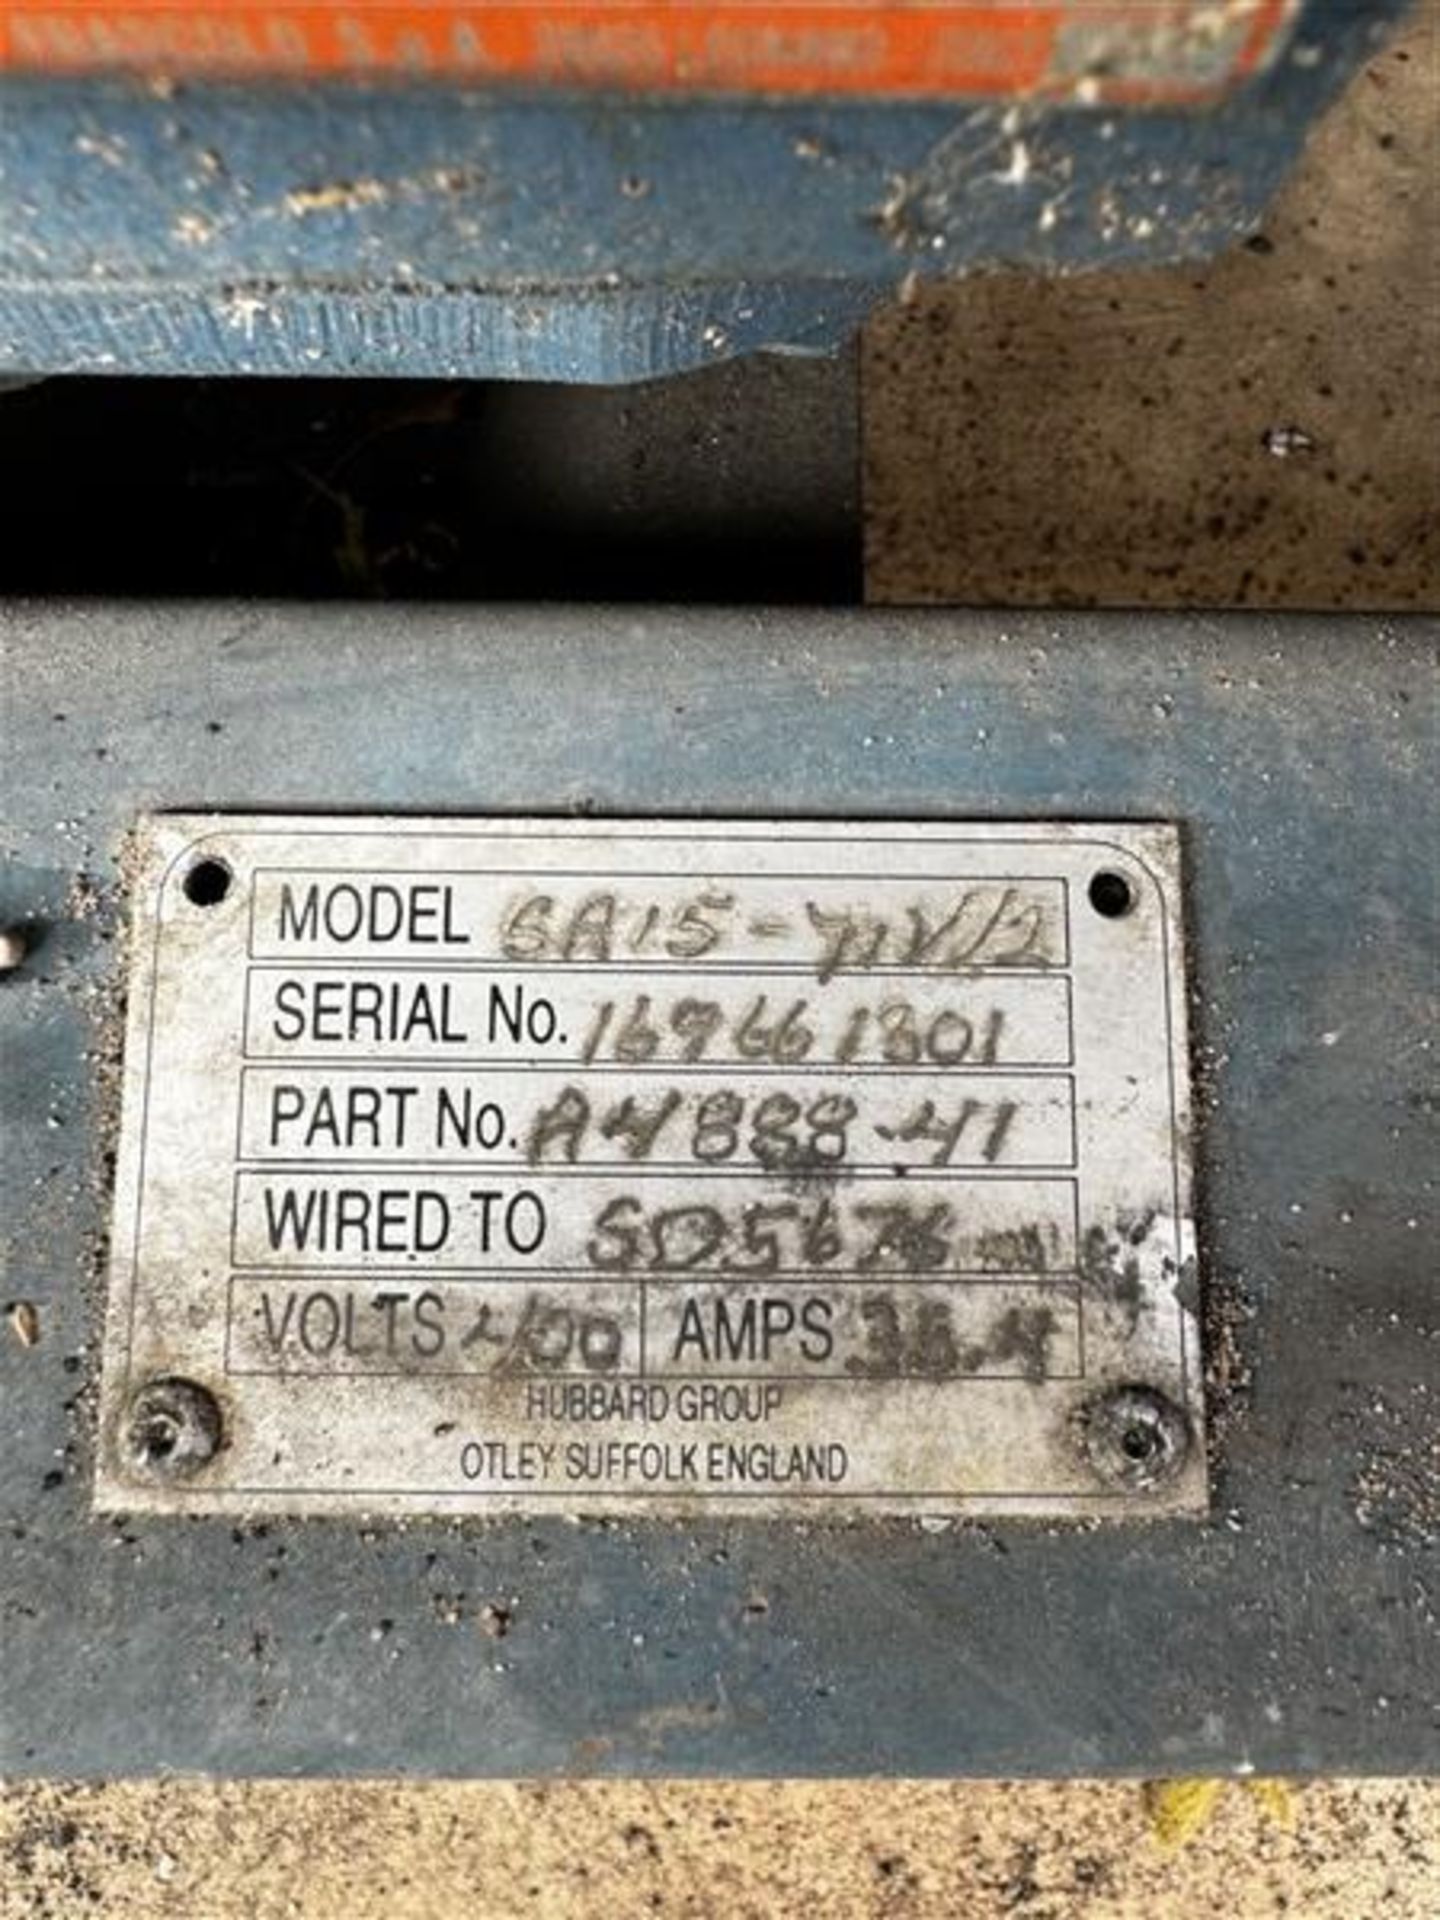 Unbranded compressor, model SA15-71V/2, serial no. 169661301 - Image 3 of 5